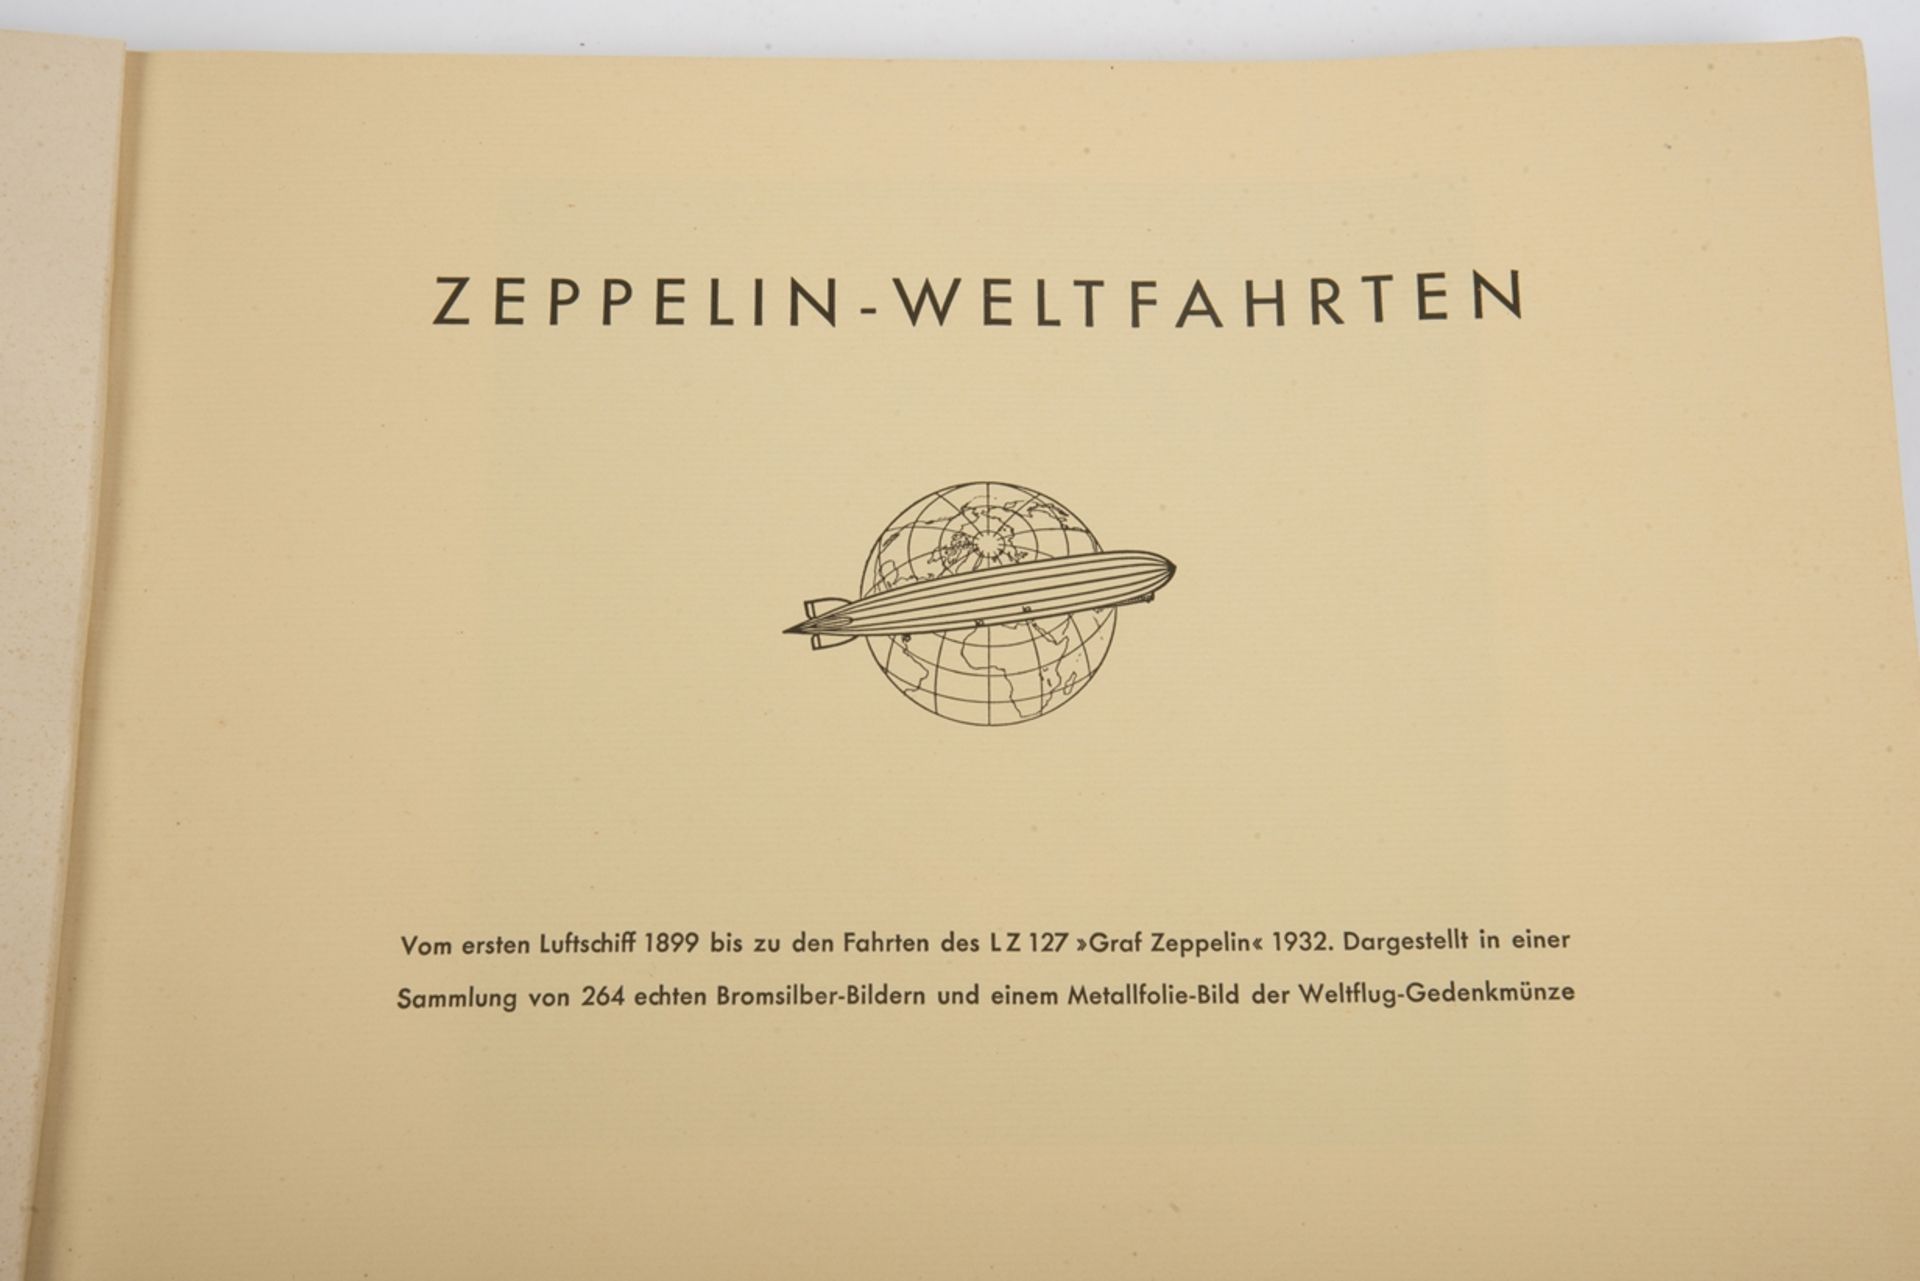 Zeppelin-Weltfahrten - Image 2 of 3